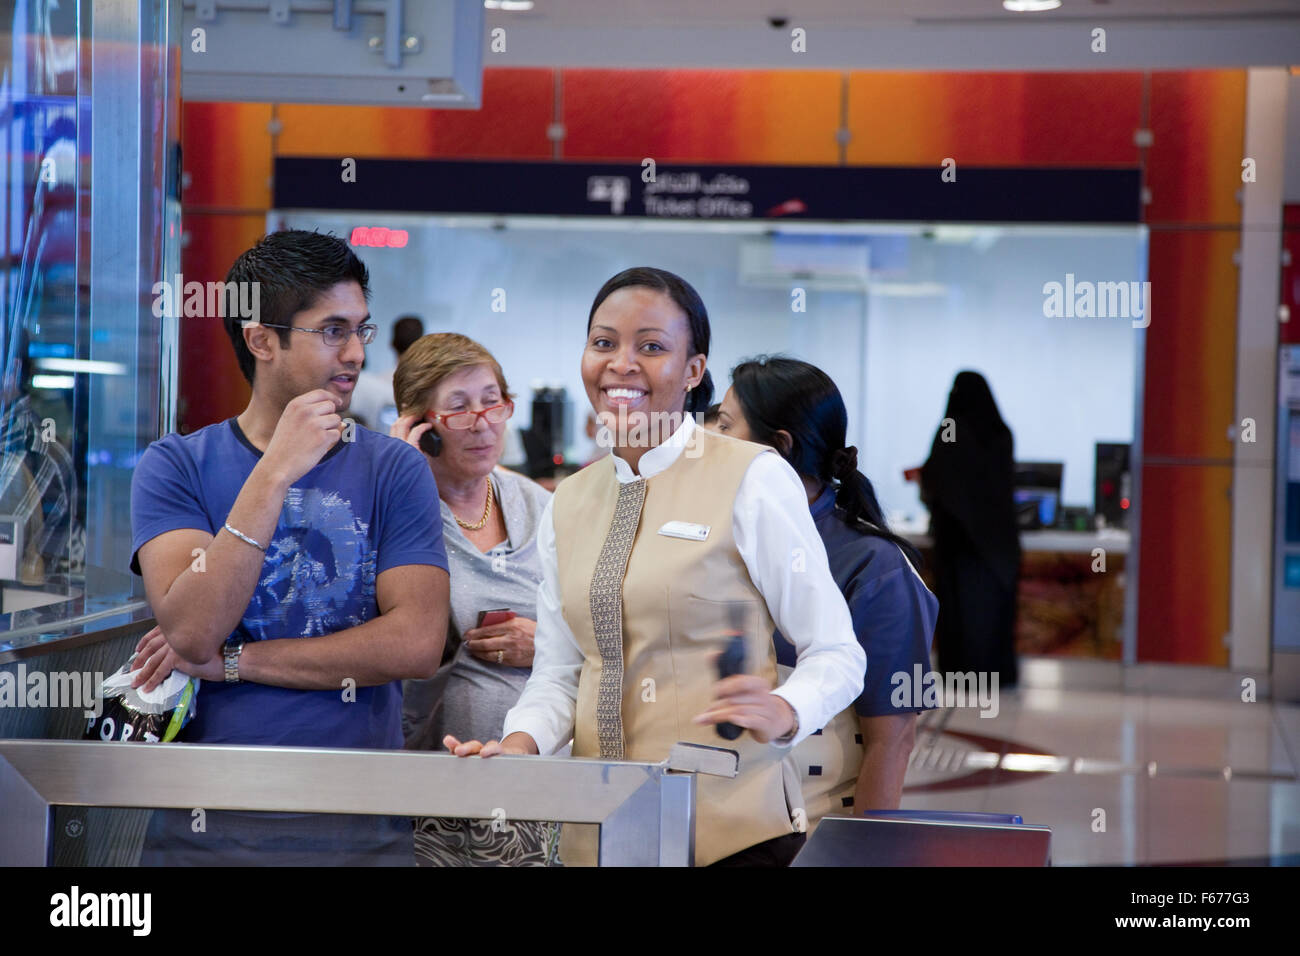 Staff assistance in the Dubai Metro Stock Photo